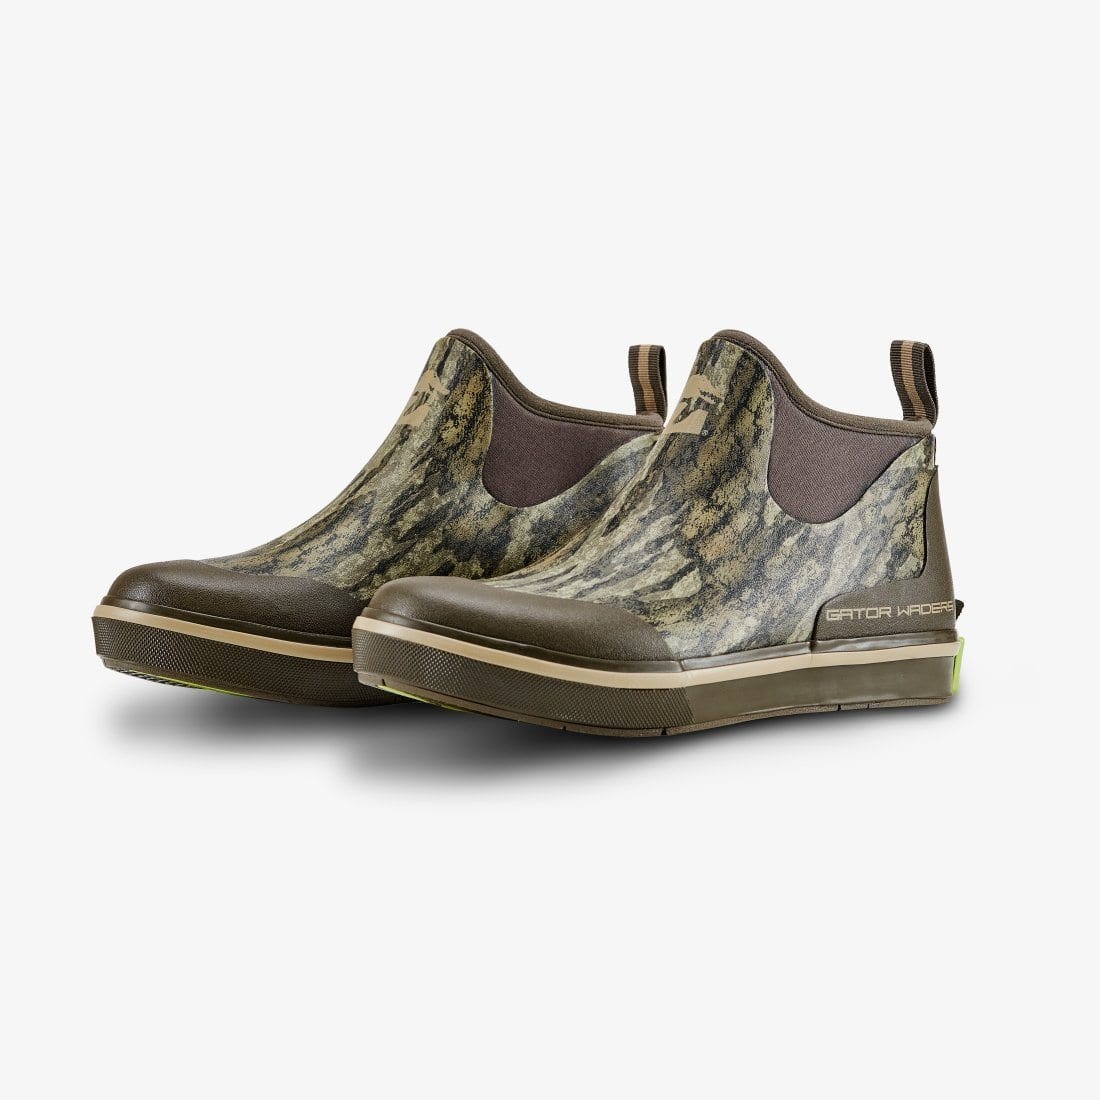 Gator Waders Gator Wader Camp Boots | Womens - Mossy Oak Bottomland Footwear